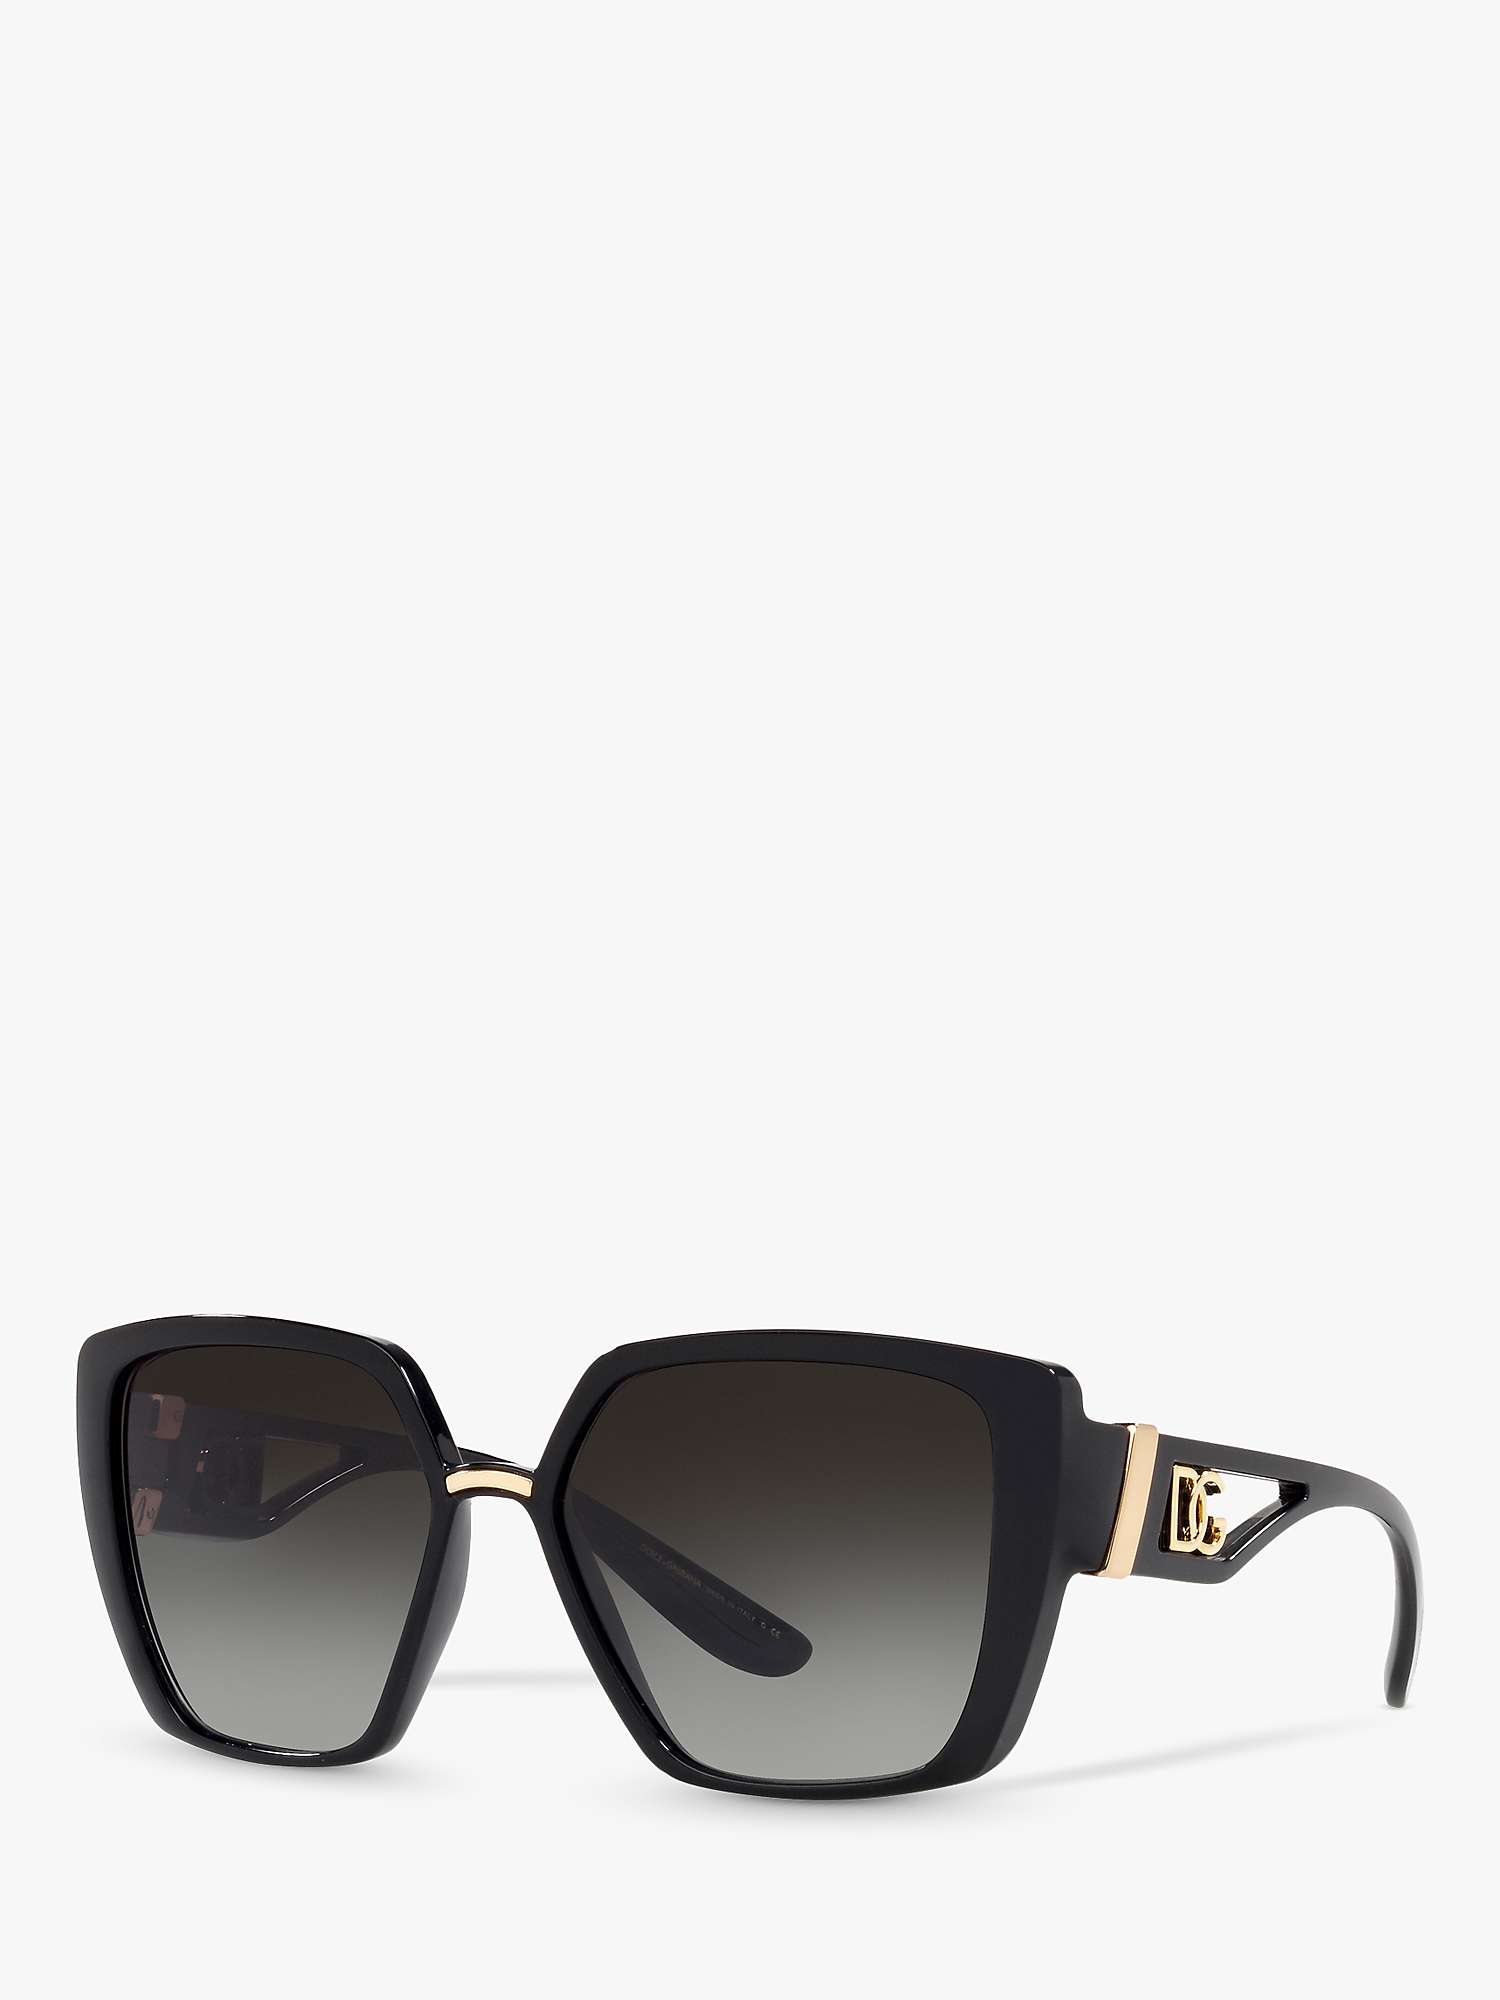 Buy Dolce & Gabbana DG6156 Women's Butterfly Sunglasses Online at johnlewis.com